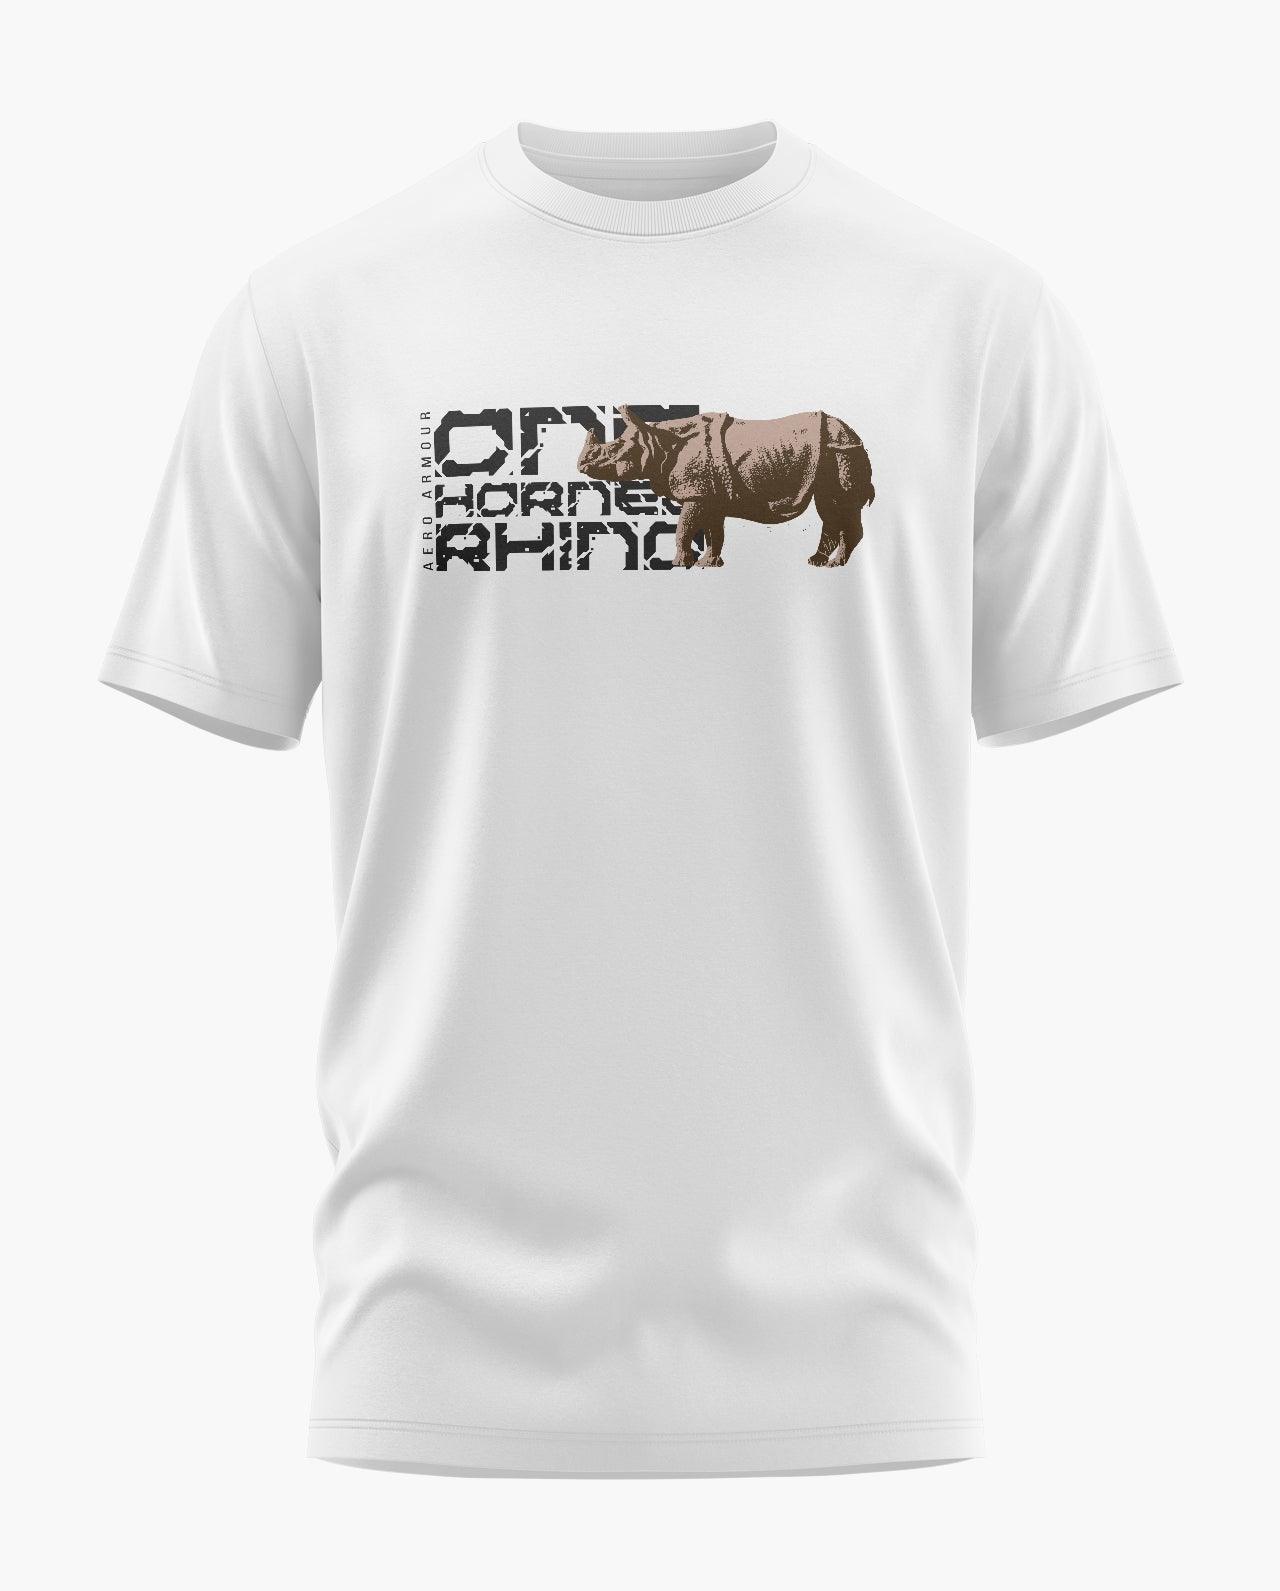 One Horned Rhino T-Shirt - Aero Armour